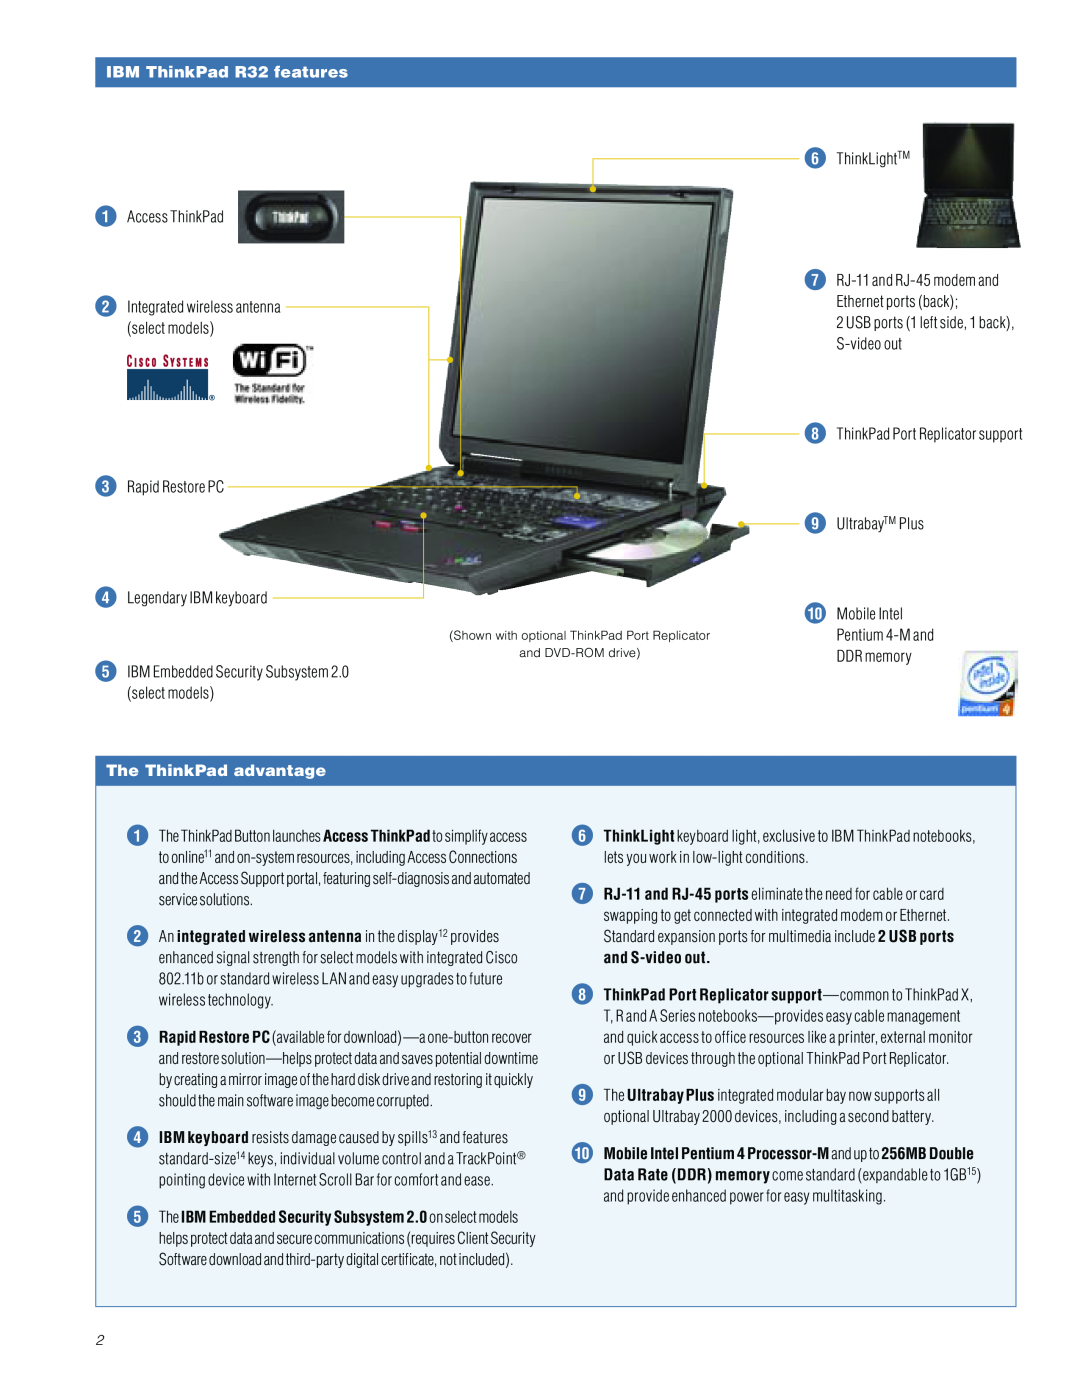 IBM IBM ThinkPad R32 features, The ThinkPad advantage, Access ThinkPad, Rapid Restore PC 4 Legendary IBM keyboard 